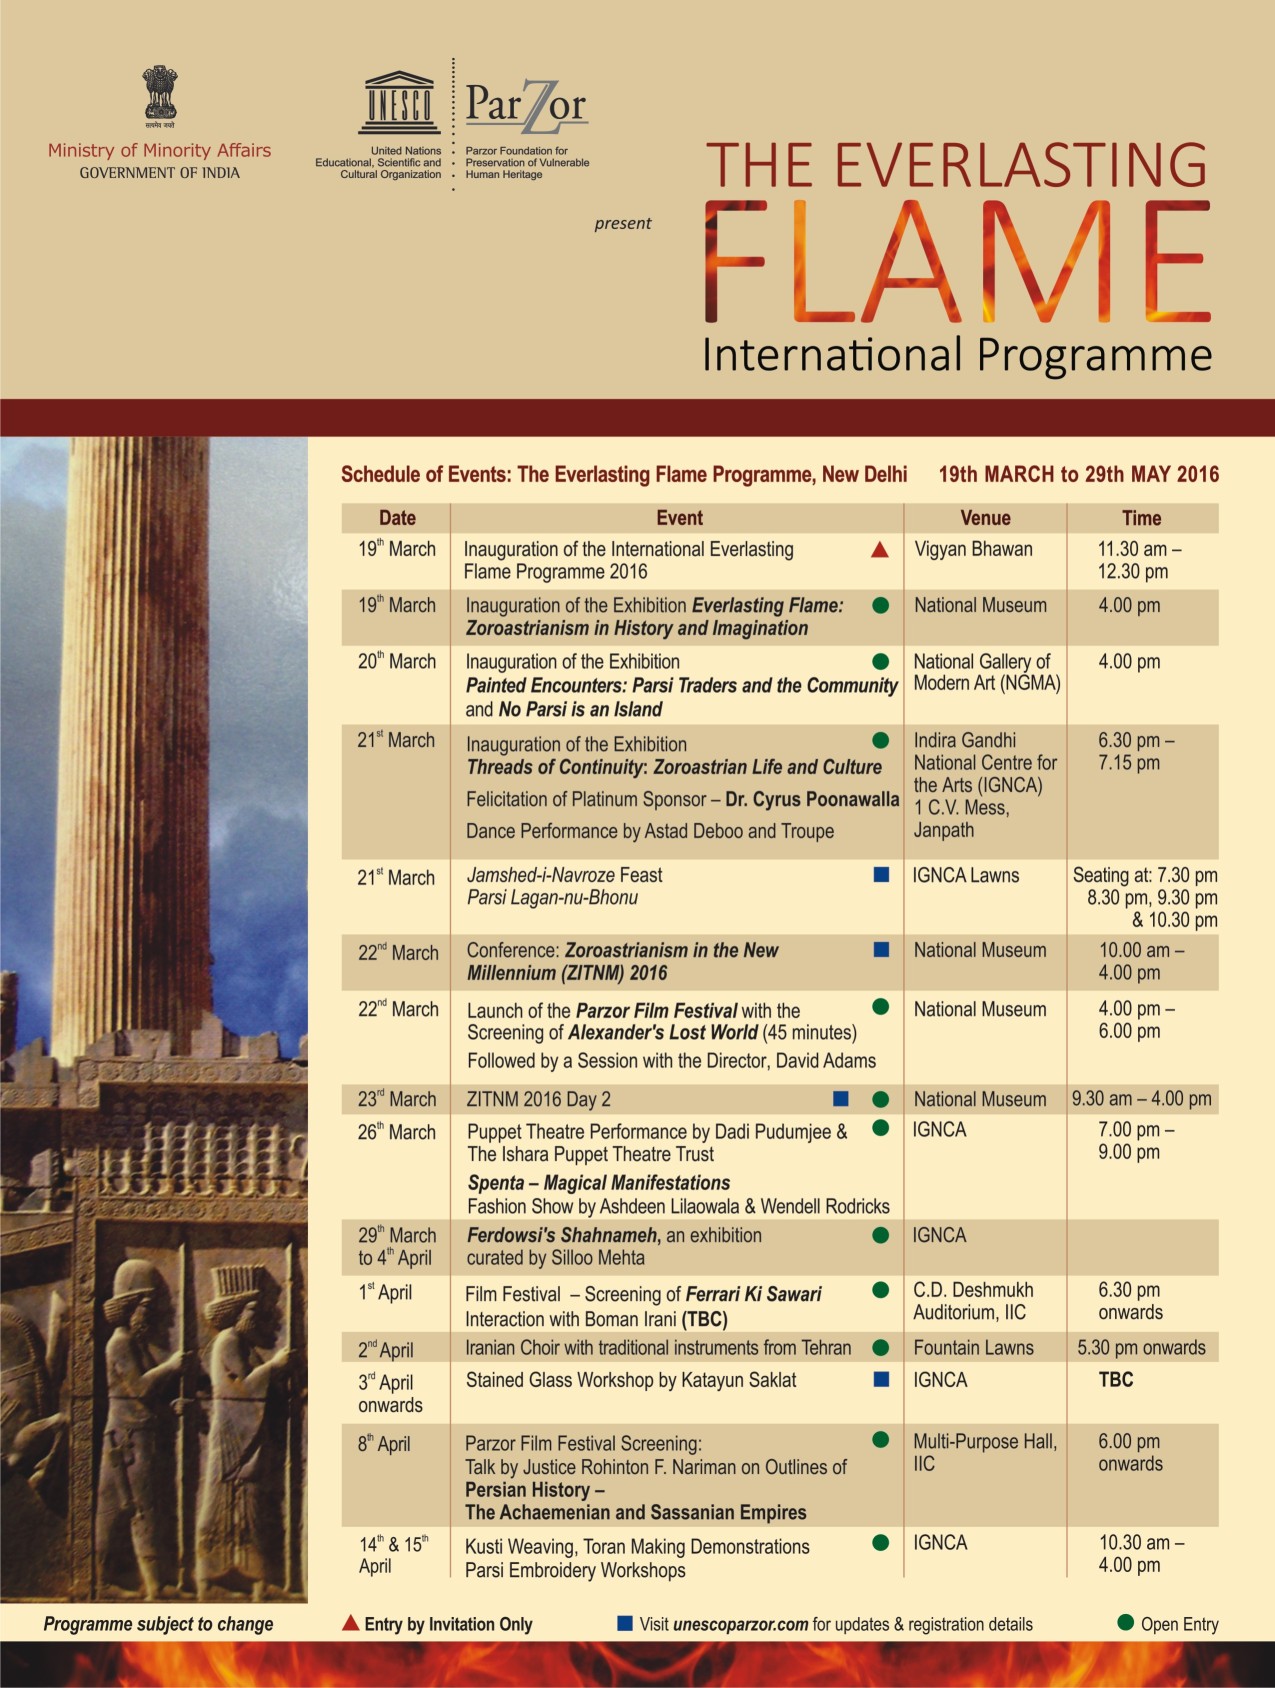 The Everlasting Flame International Programme